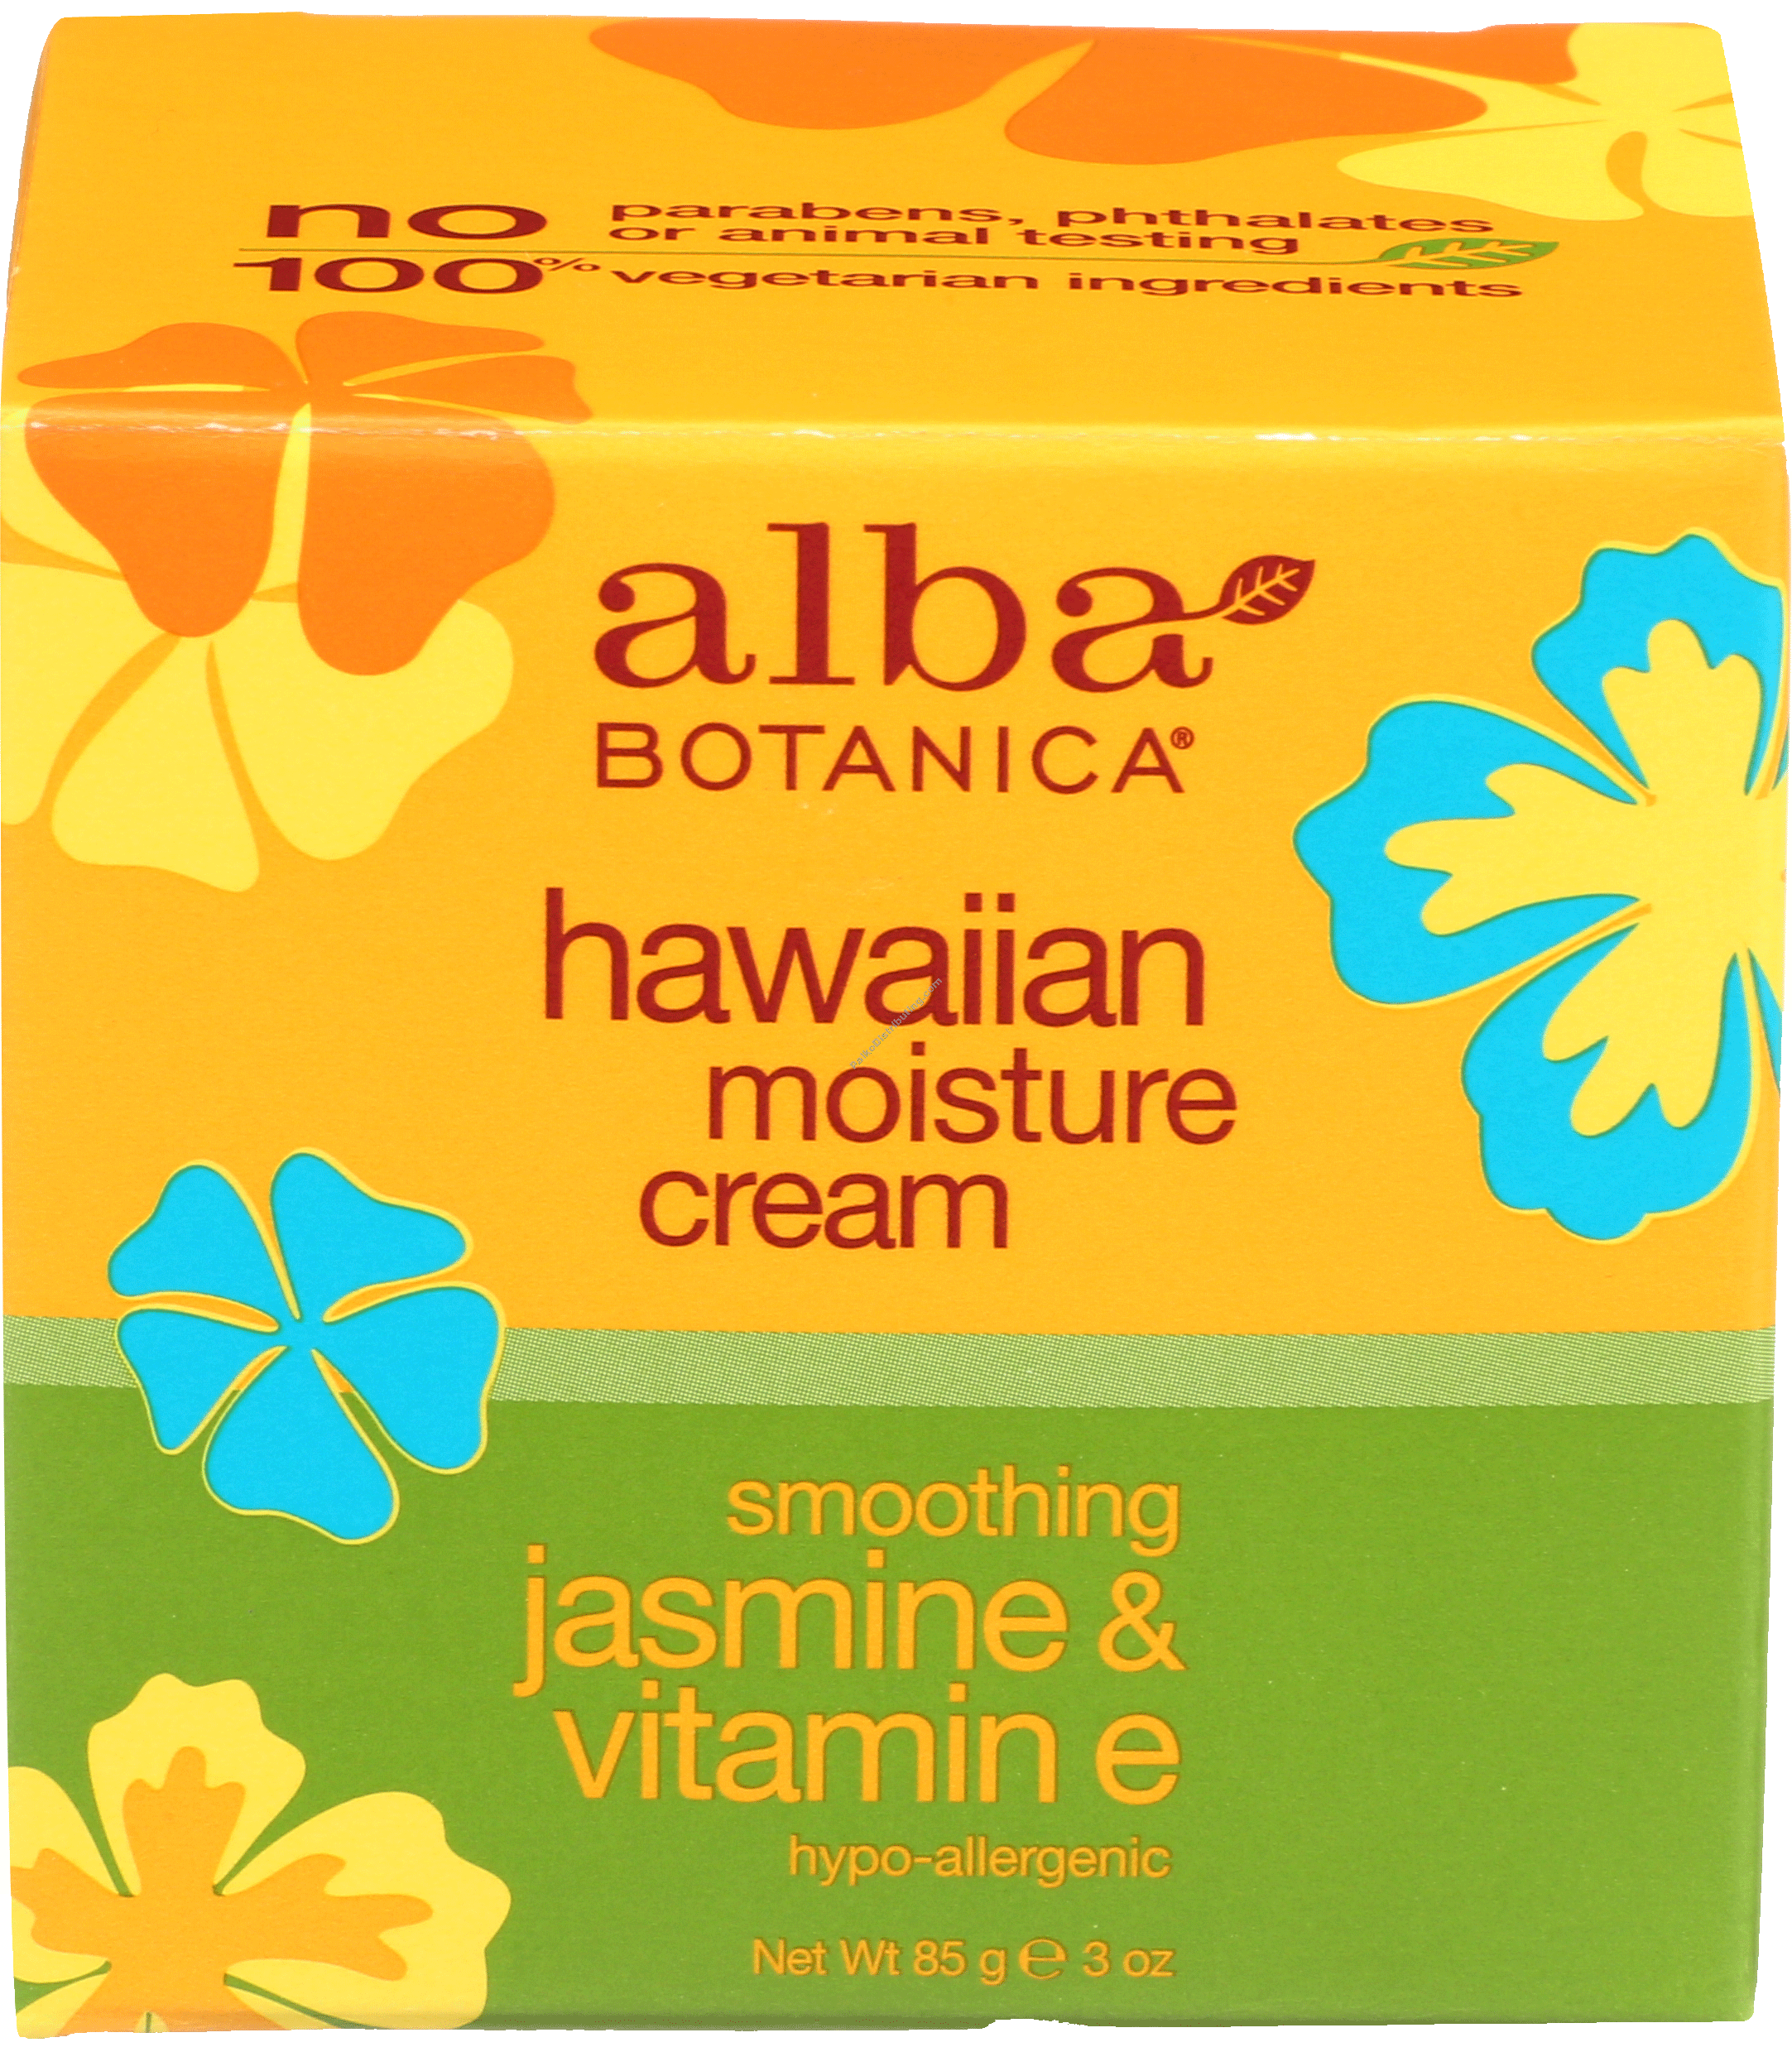 Product Image: Jasmine & Vitamin E Moisture Cream